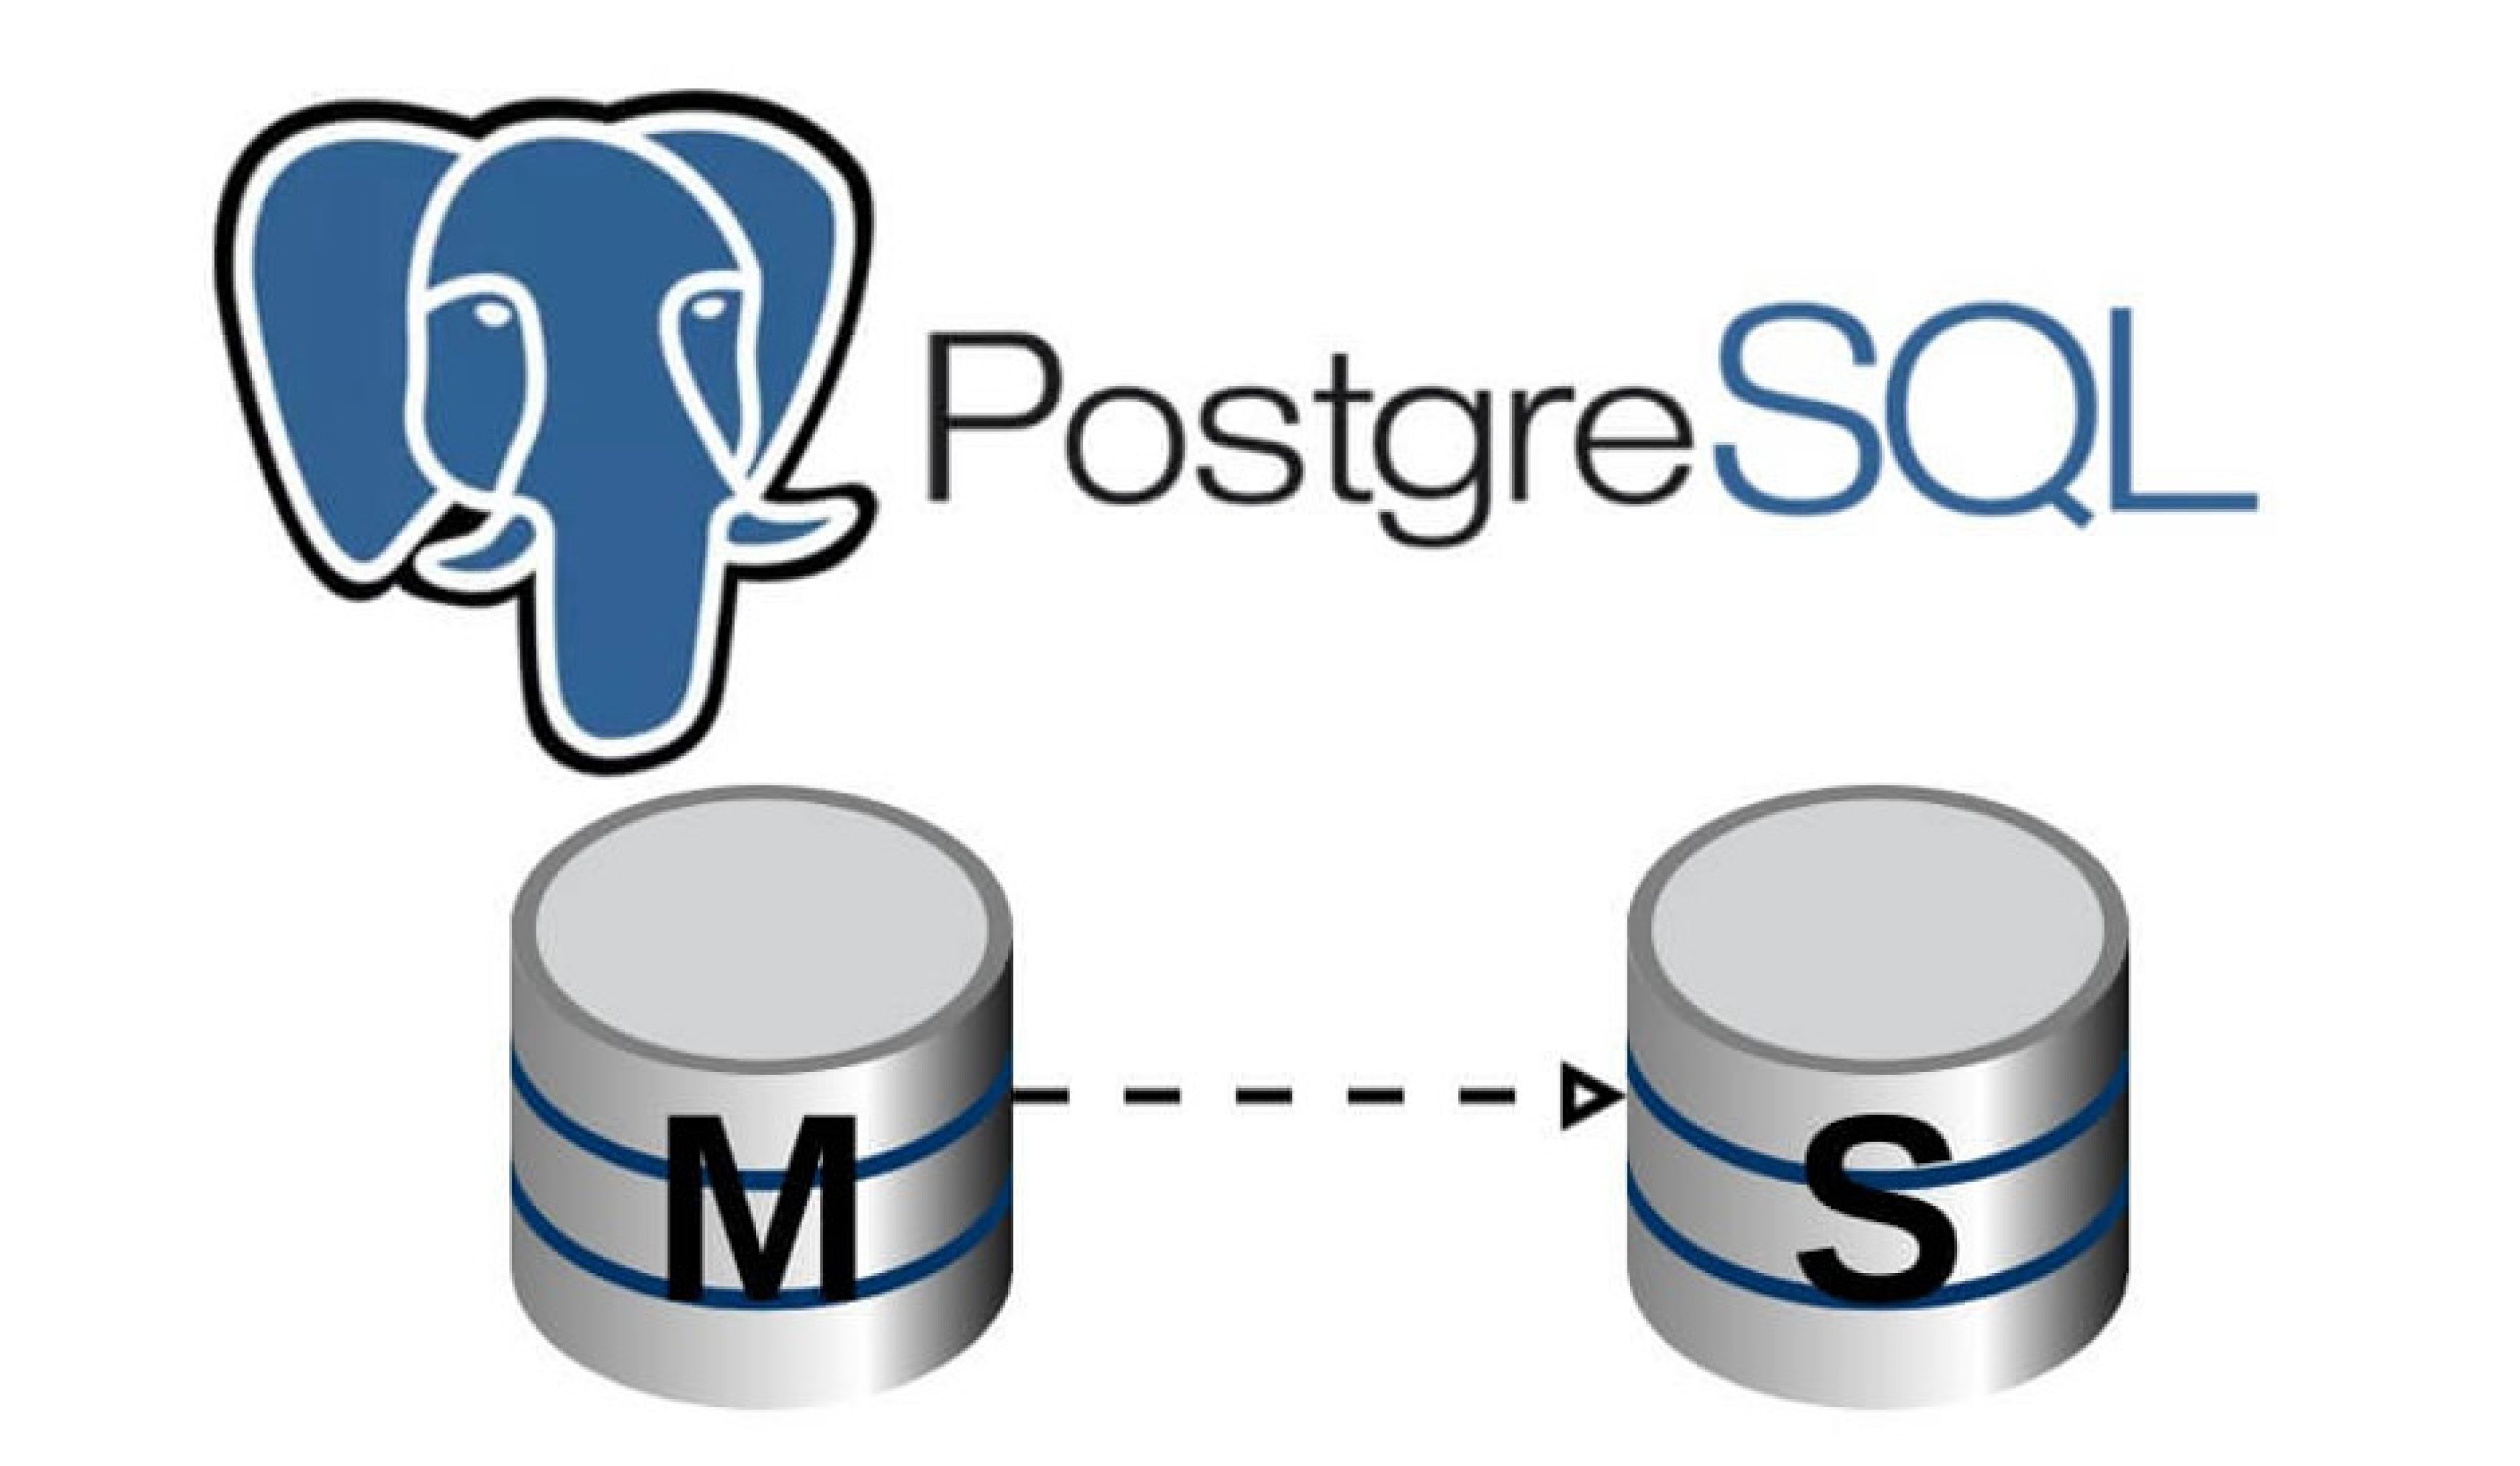 Postgresql packages. POSTGRESQL картинки. Постгрес SQL. СУБД POSTGRESQL. POSTGRESQL 14.